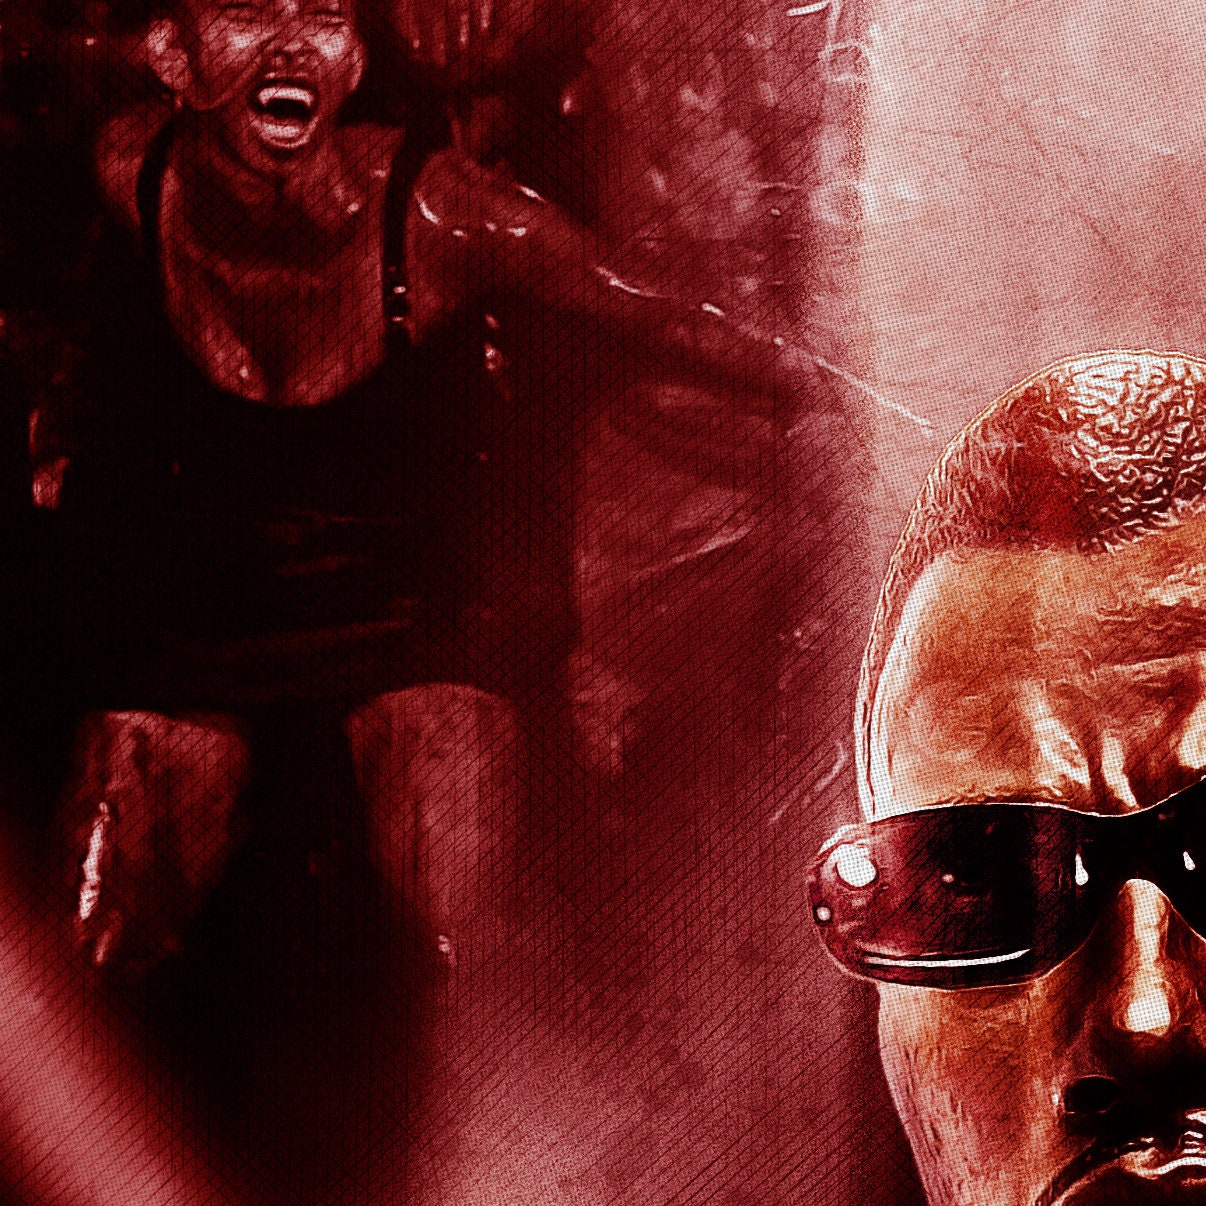 Blade, Wesley Snipes alternate movie poster | 11x17 Art Print